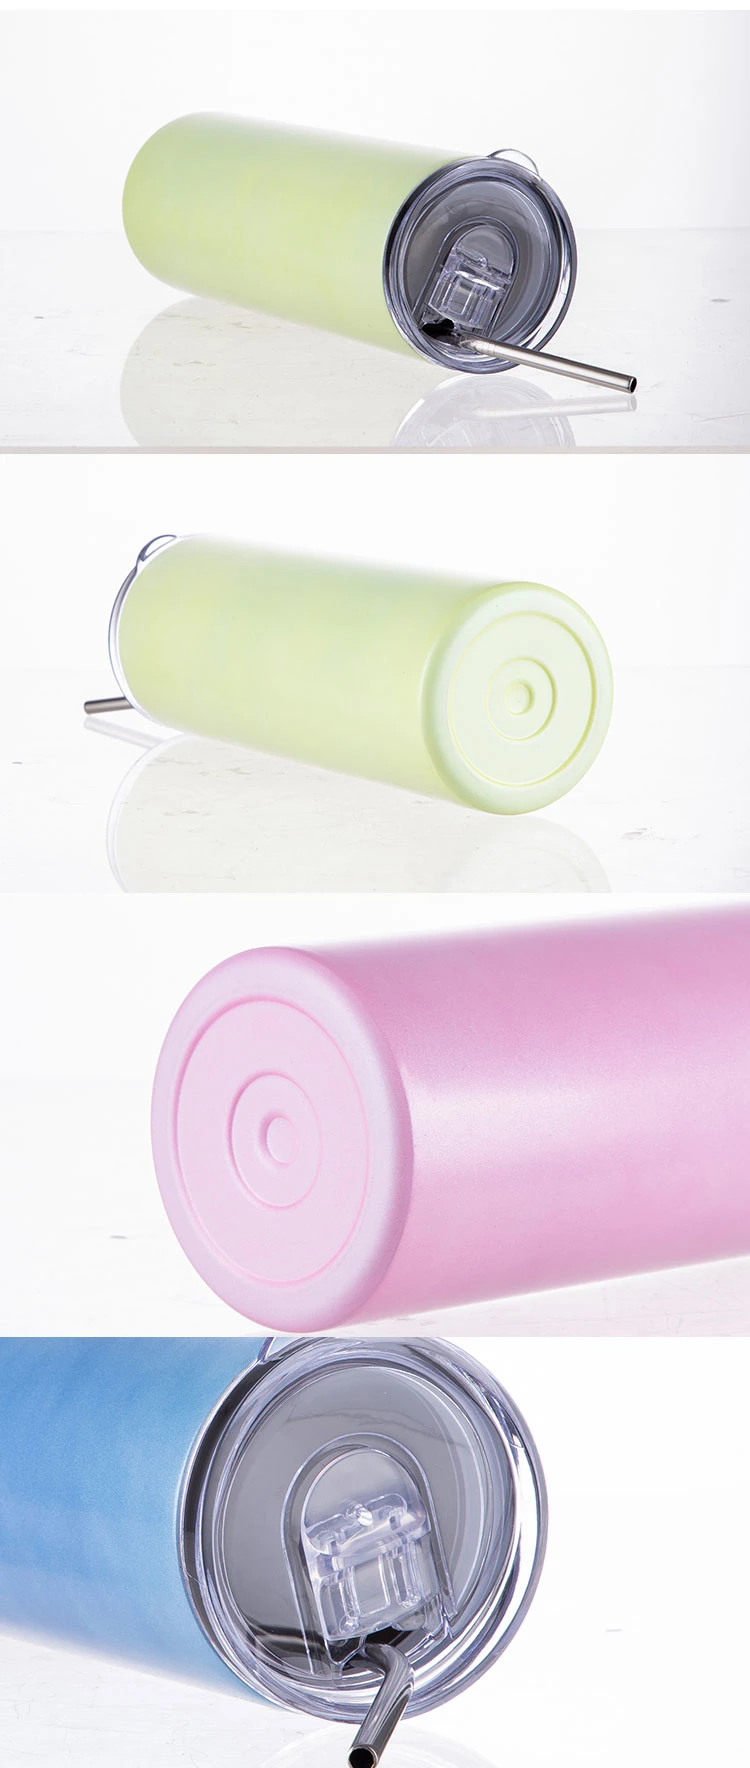 Bestsub Wholesale 20oz Vacuum Light Sensitive Sunshine Color Changing Skinny UV Color Change Sublimation Tumbler